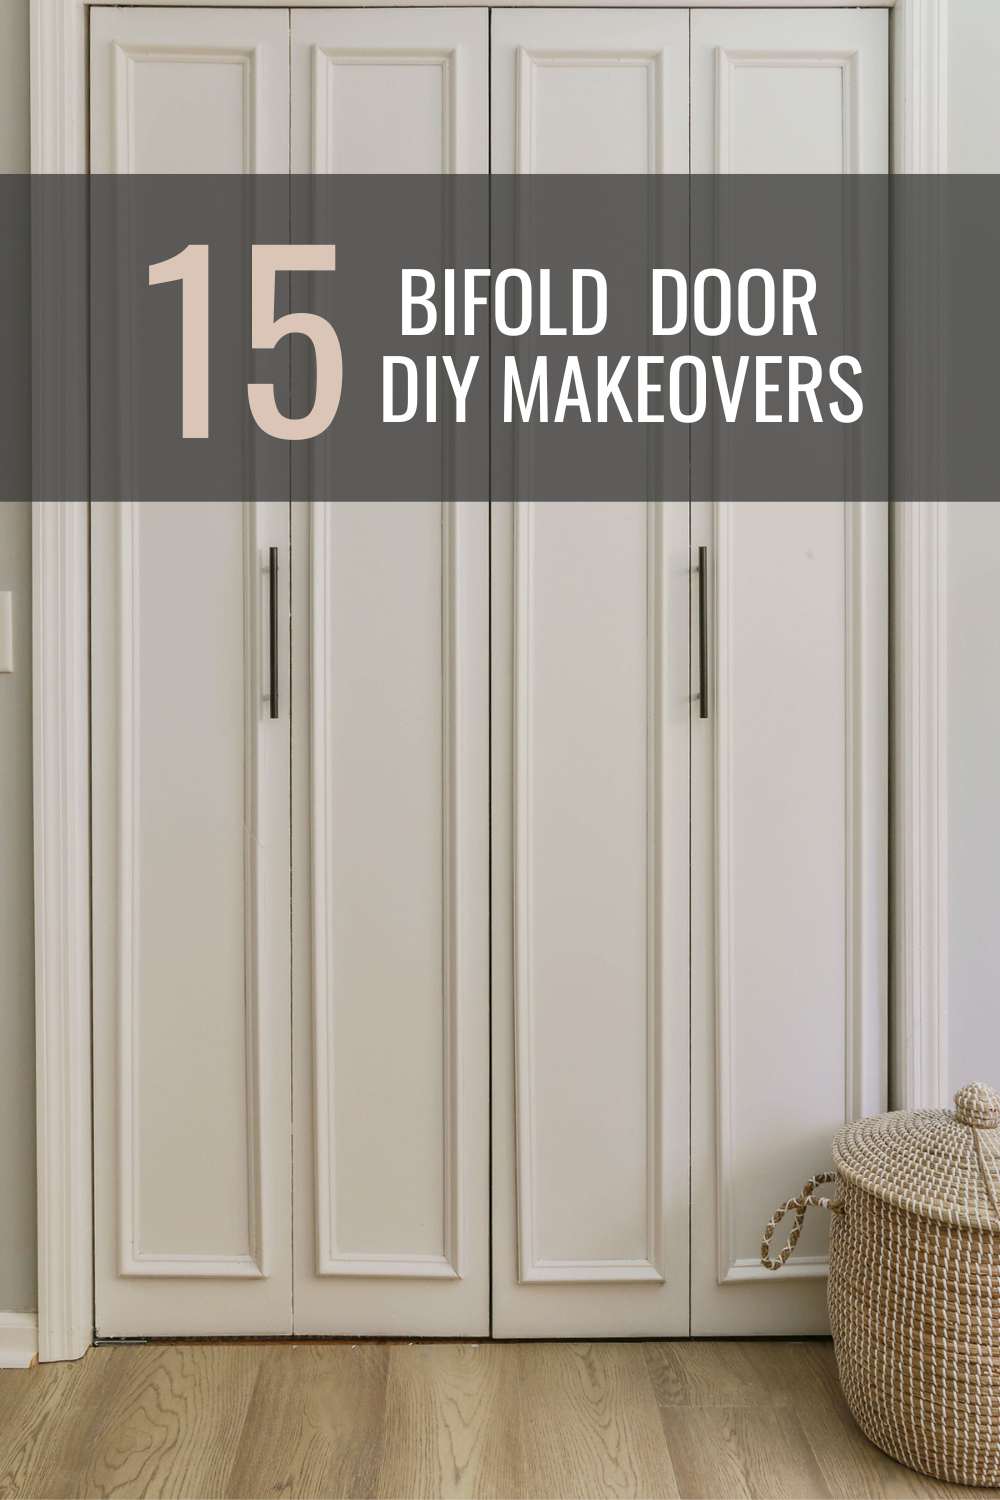 7 Clever DIY Sliding Closet Door Locks - That Work!